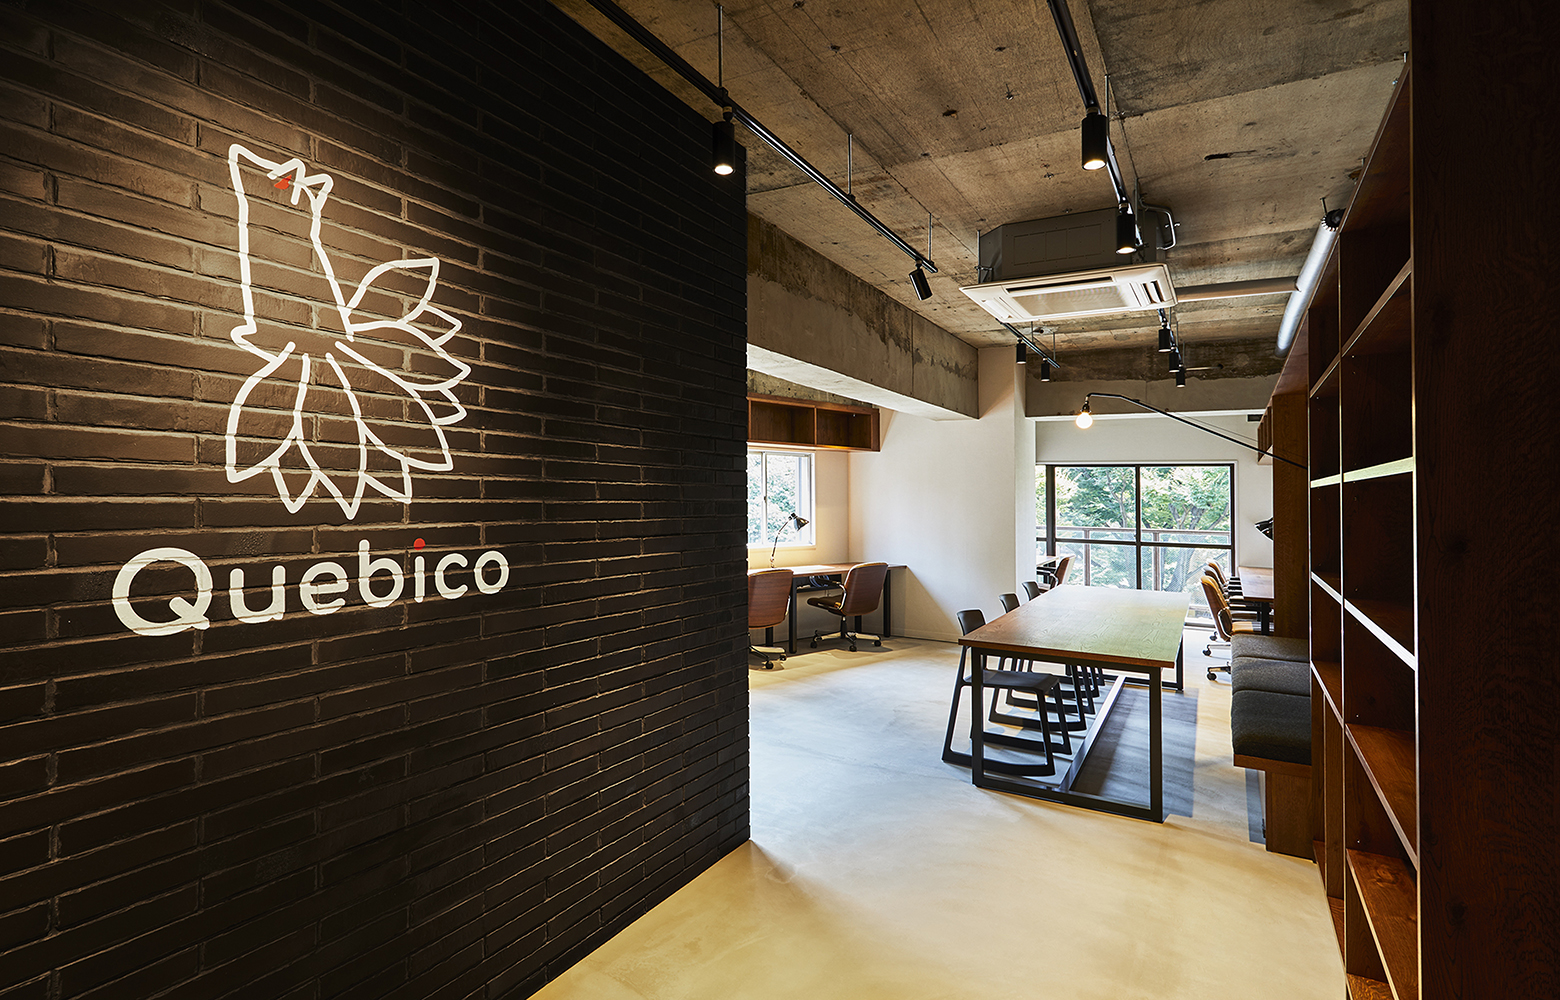 Quebico株式会社 Logo デザイン・レイアウト事例